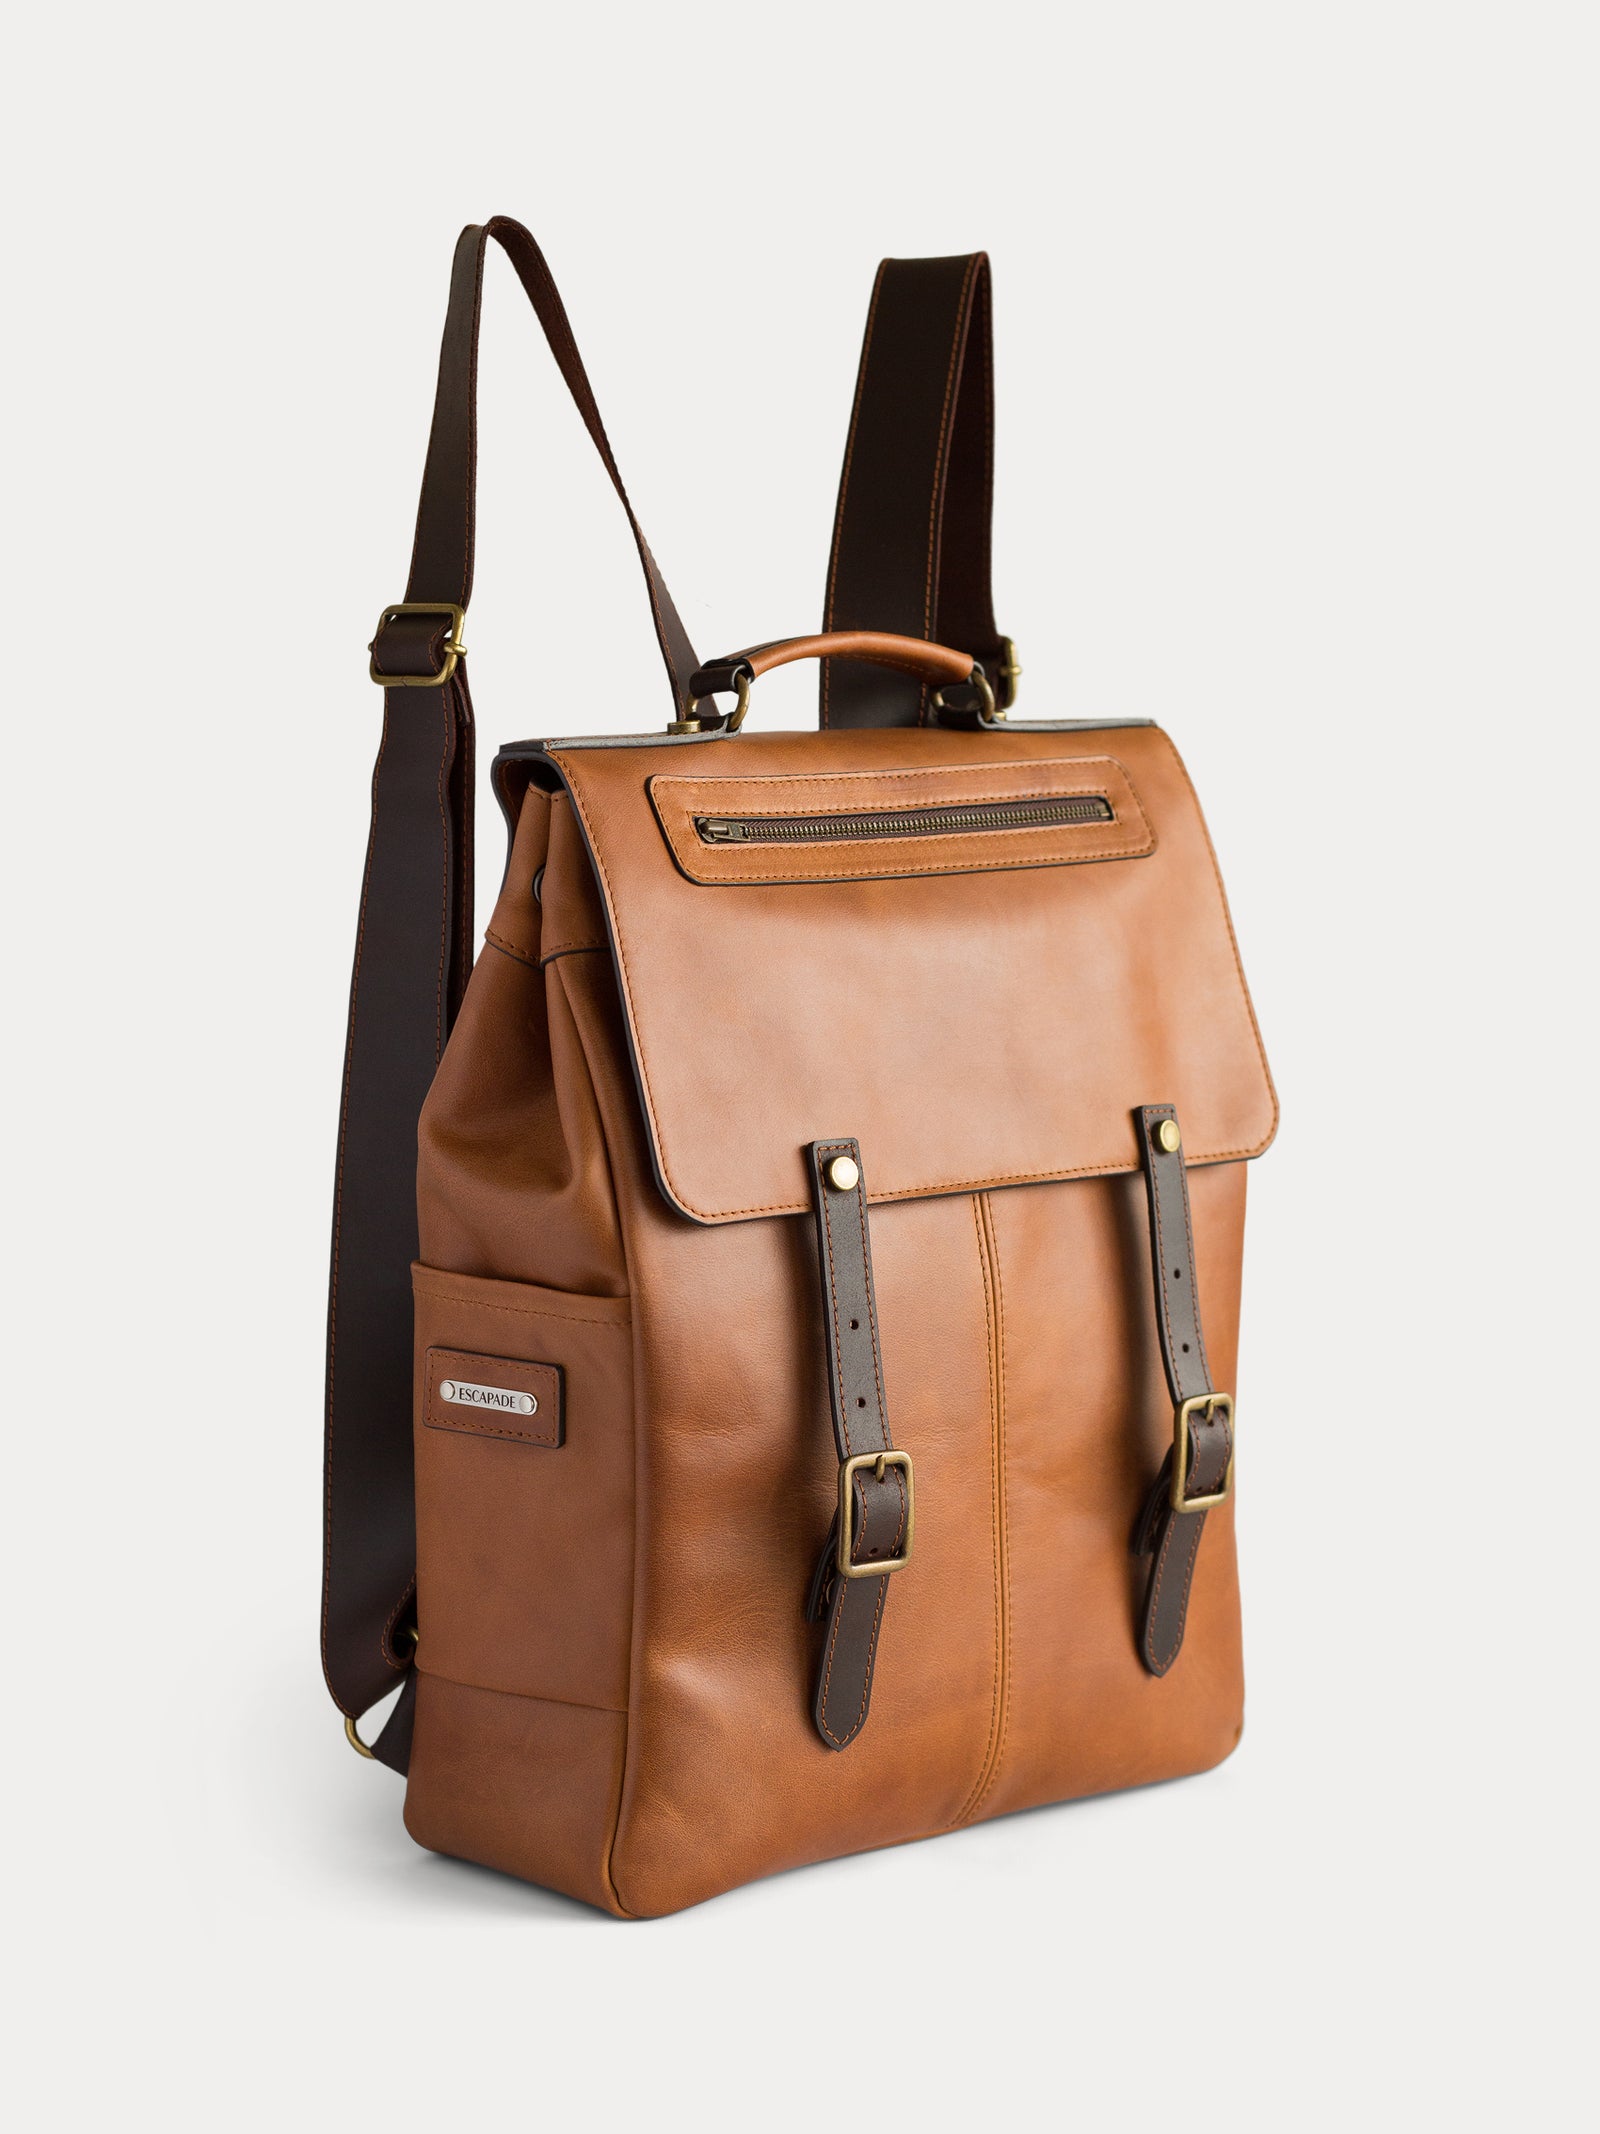 handcrafted camel leather backpack for men